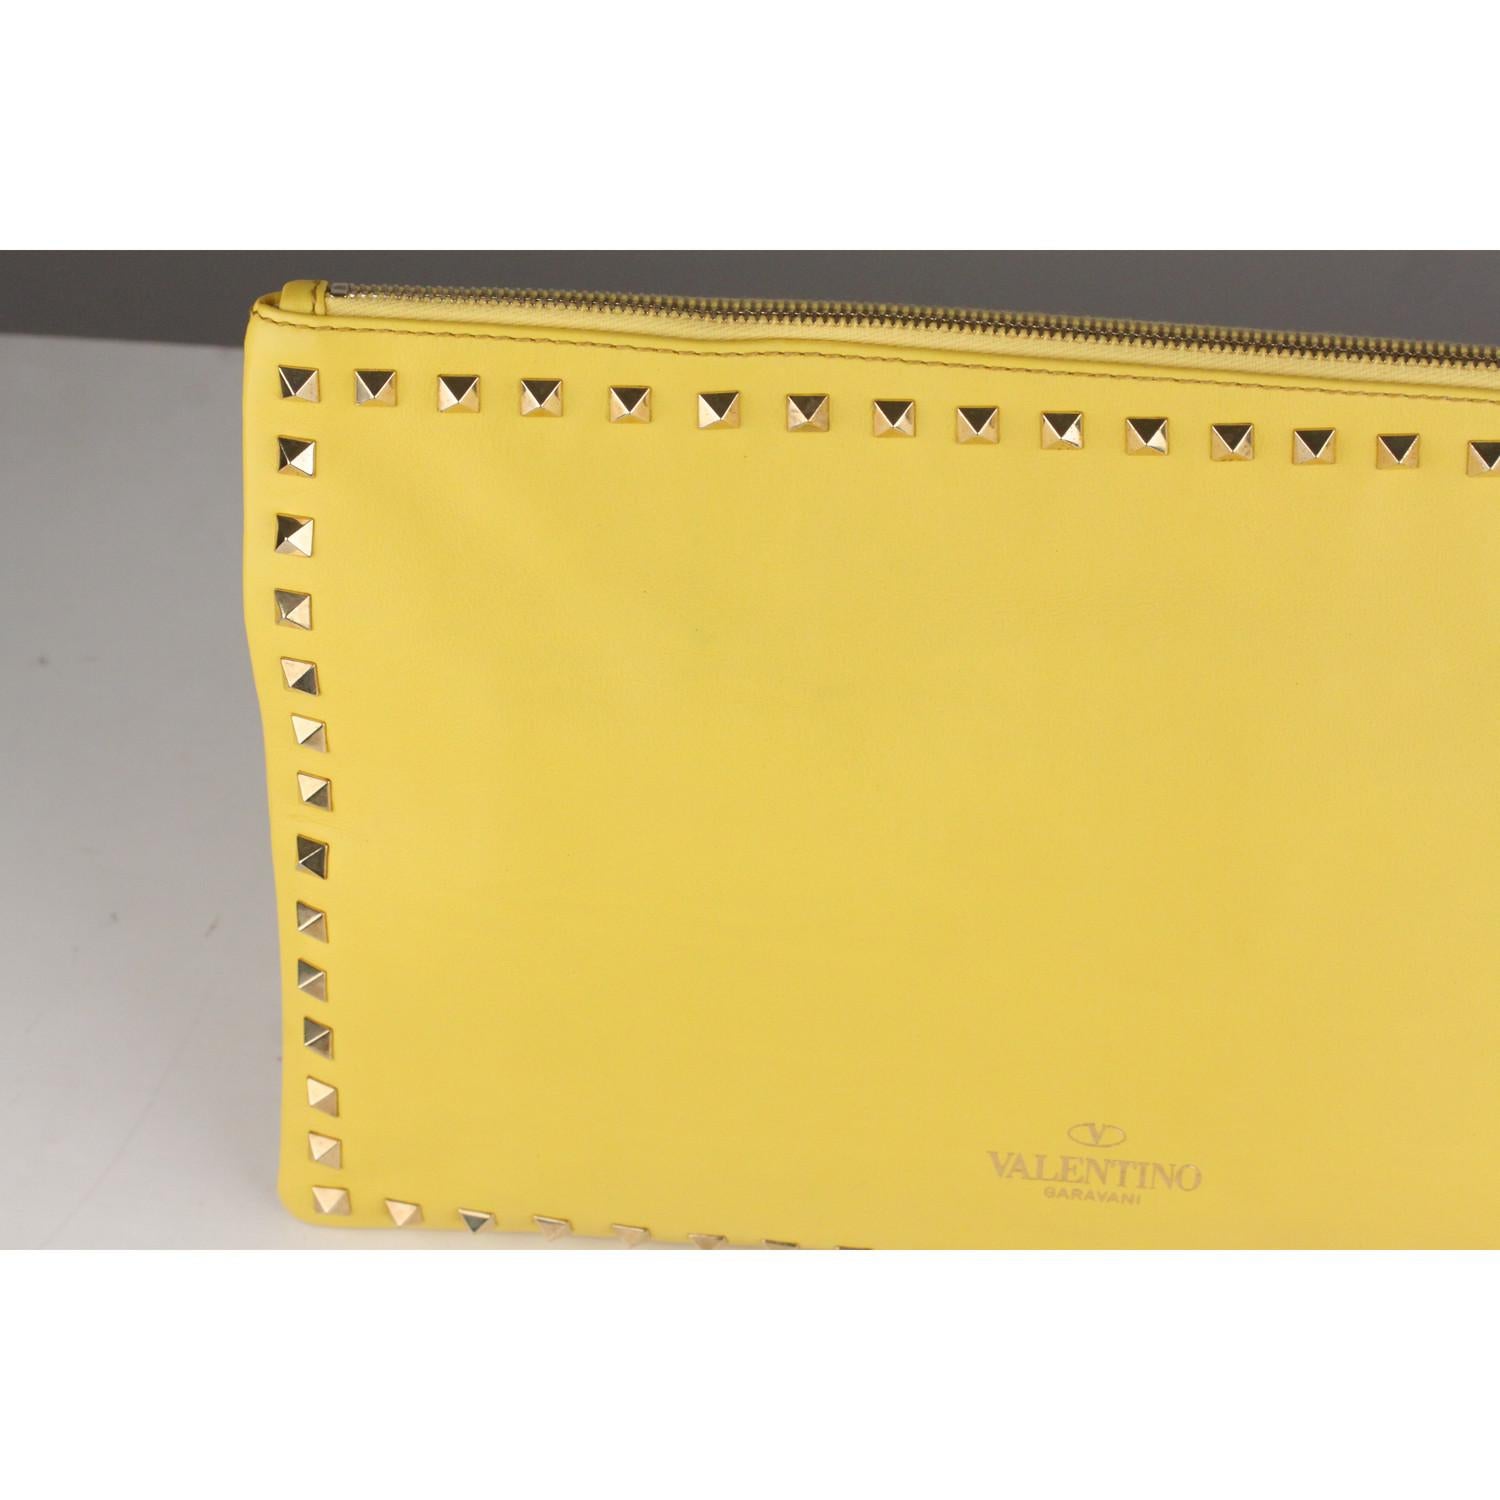 Valentino Yellow Leather Studded Rockstud Large Clutch Wrist Bag 4